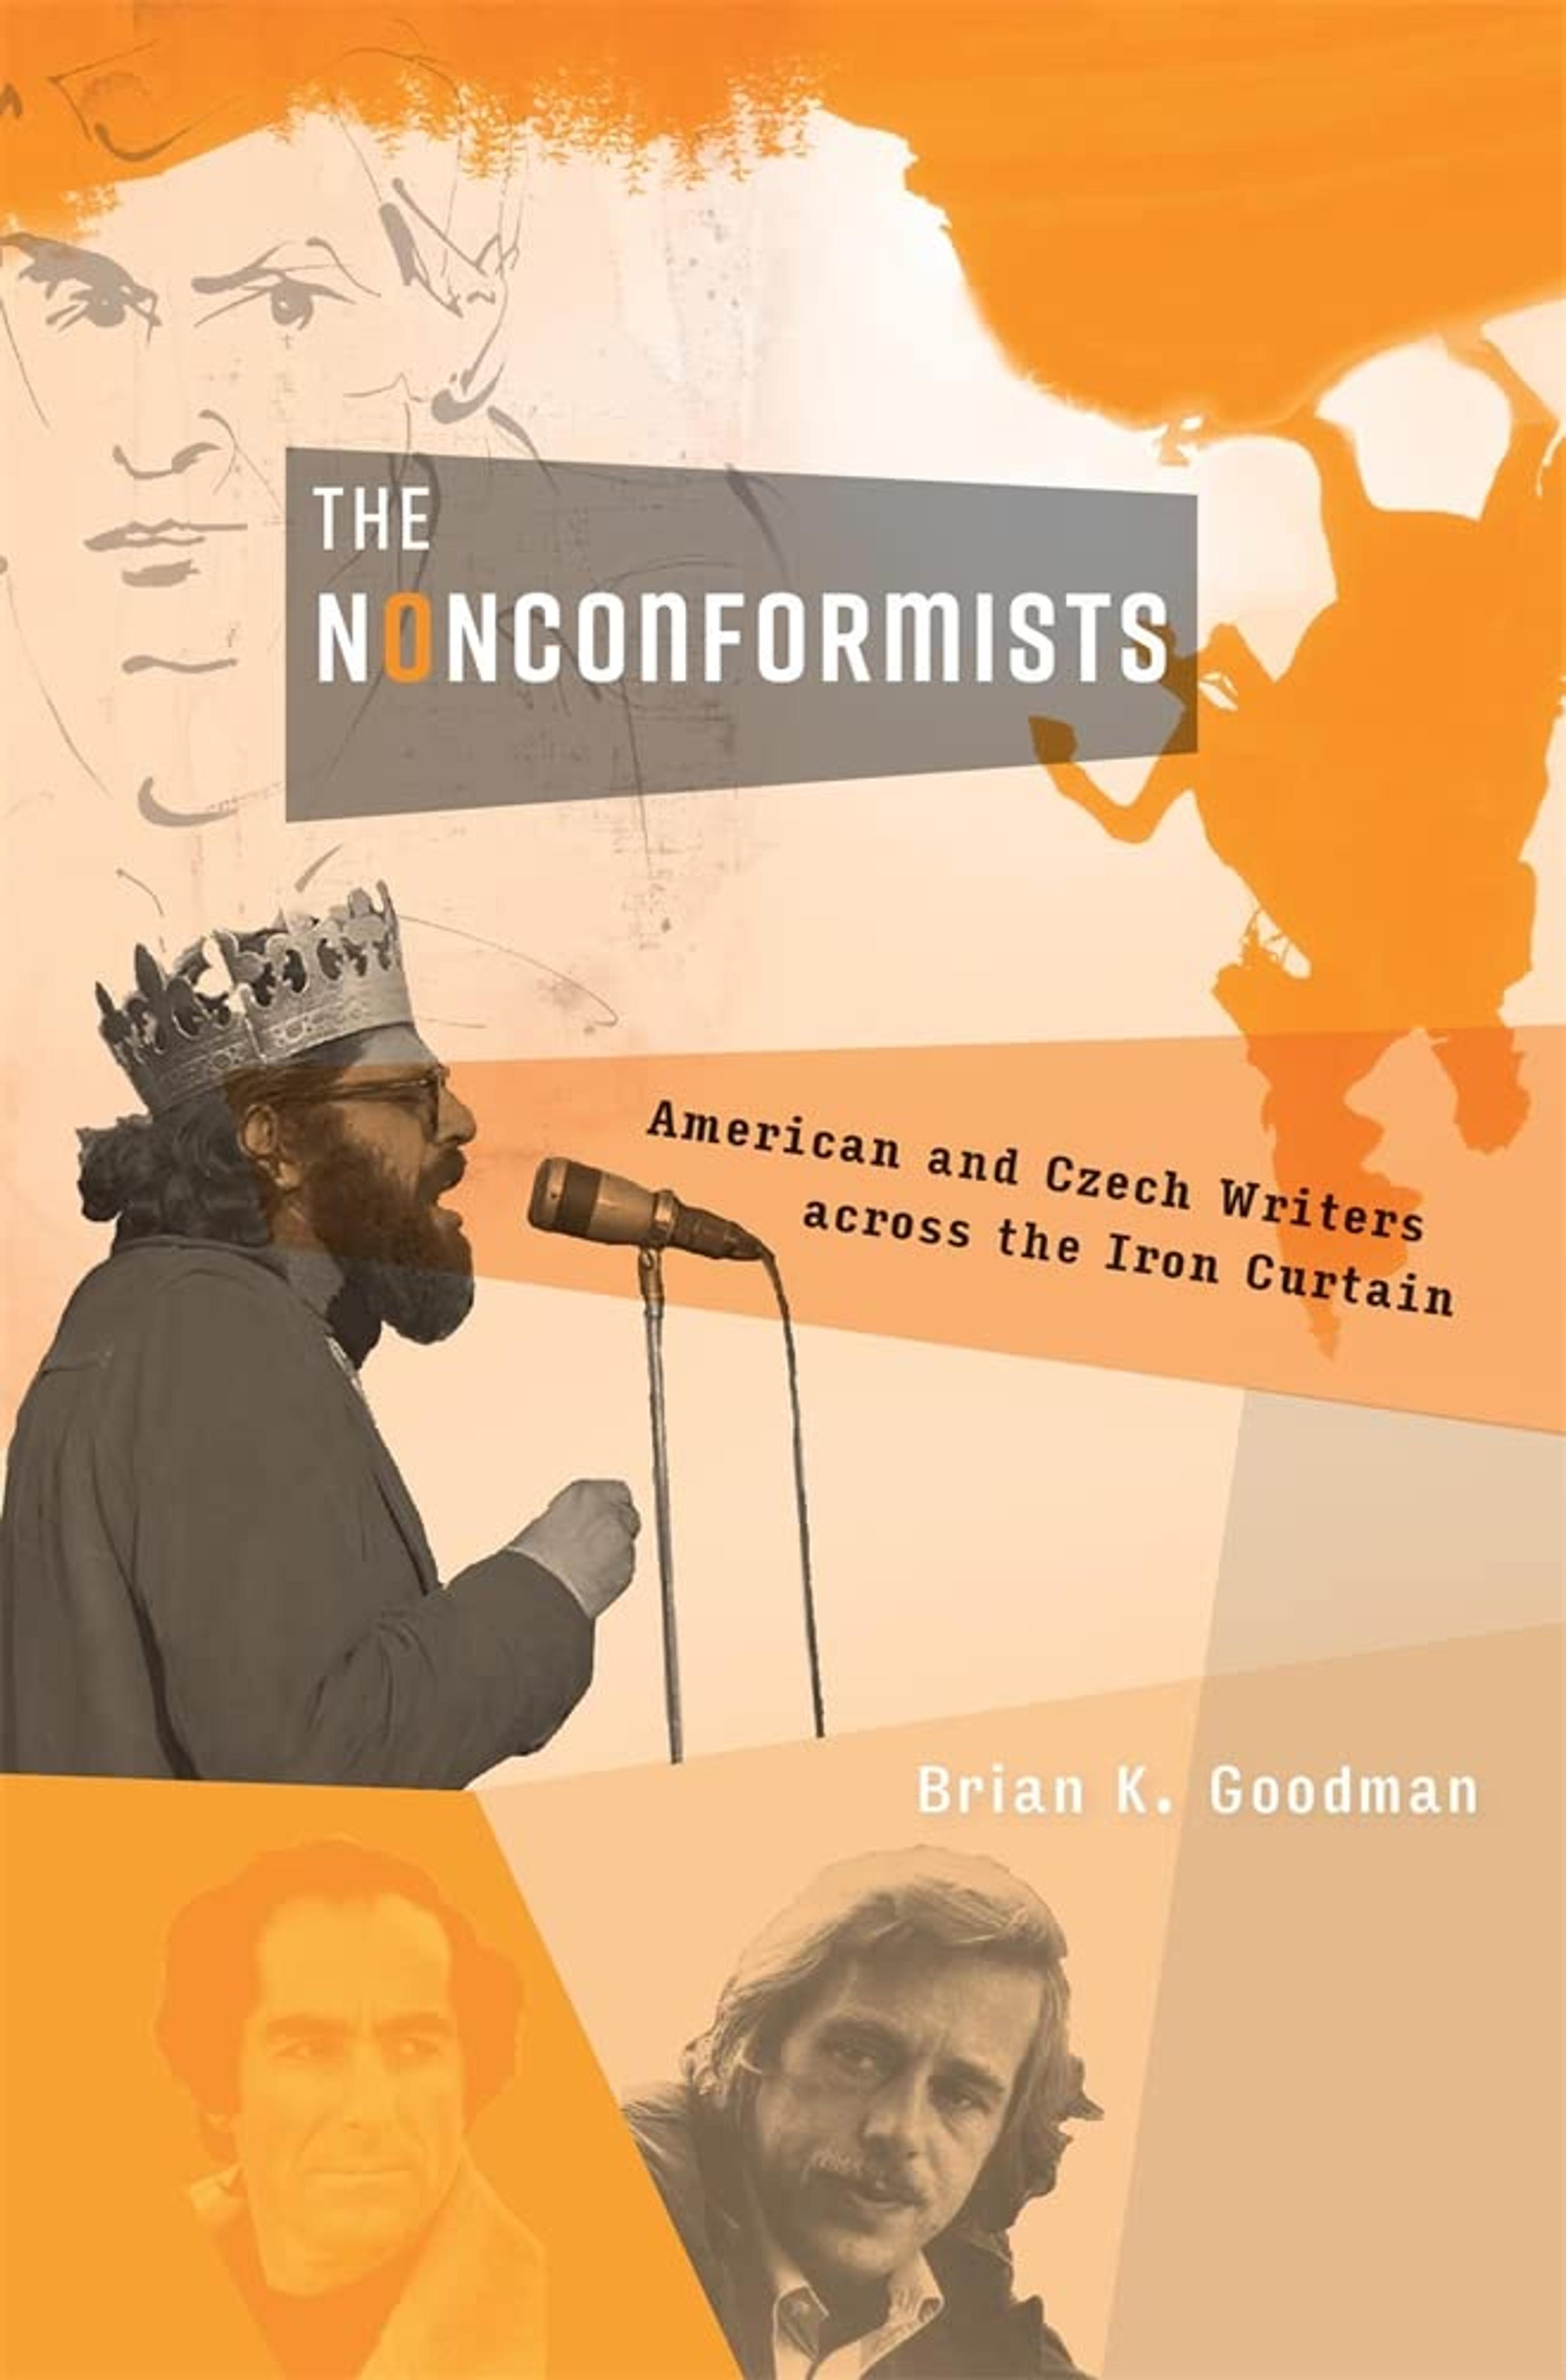 A Transatlantic Metamorphosis: On Brian K. Goodman’s “The Nonconformists”